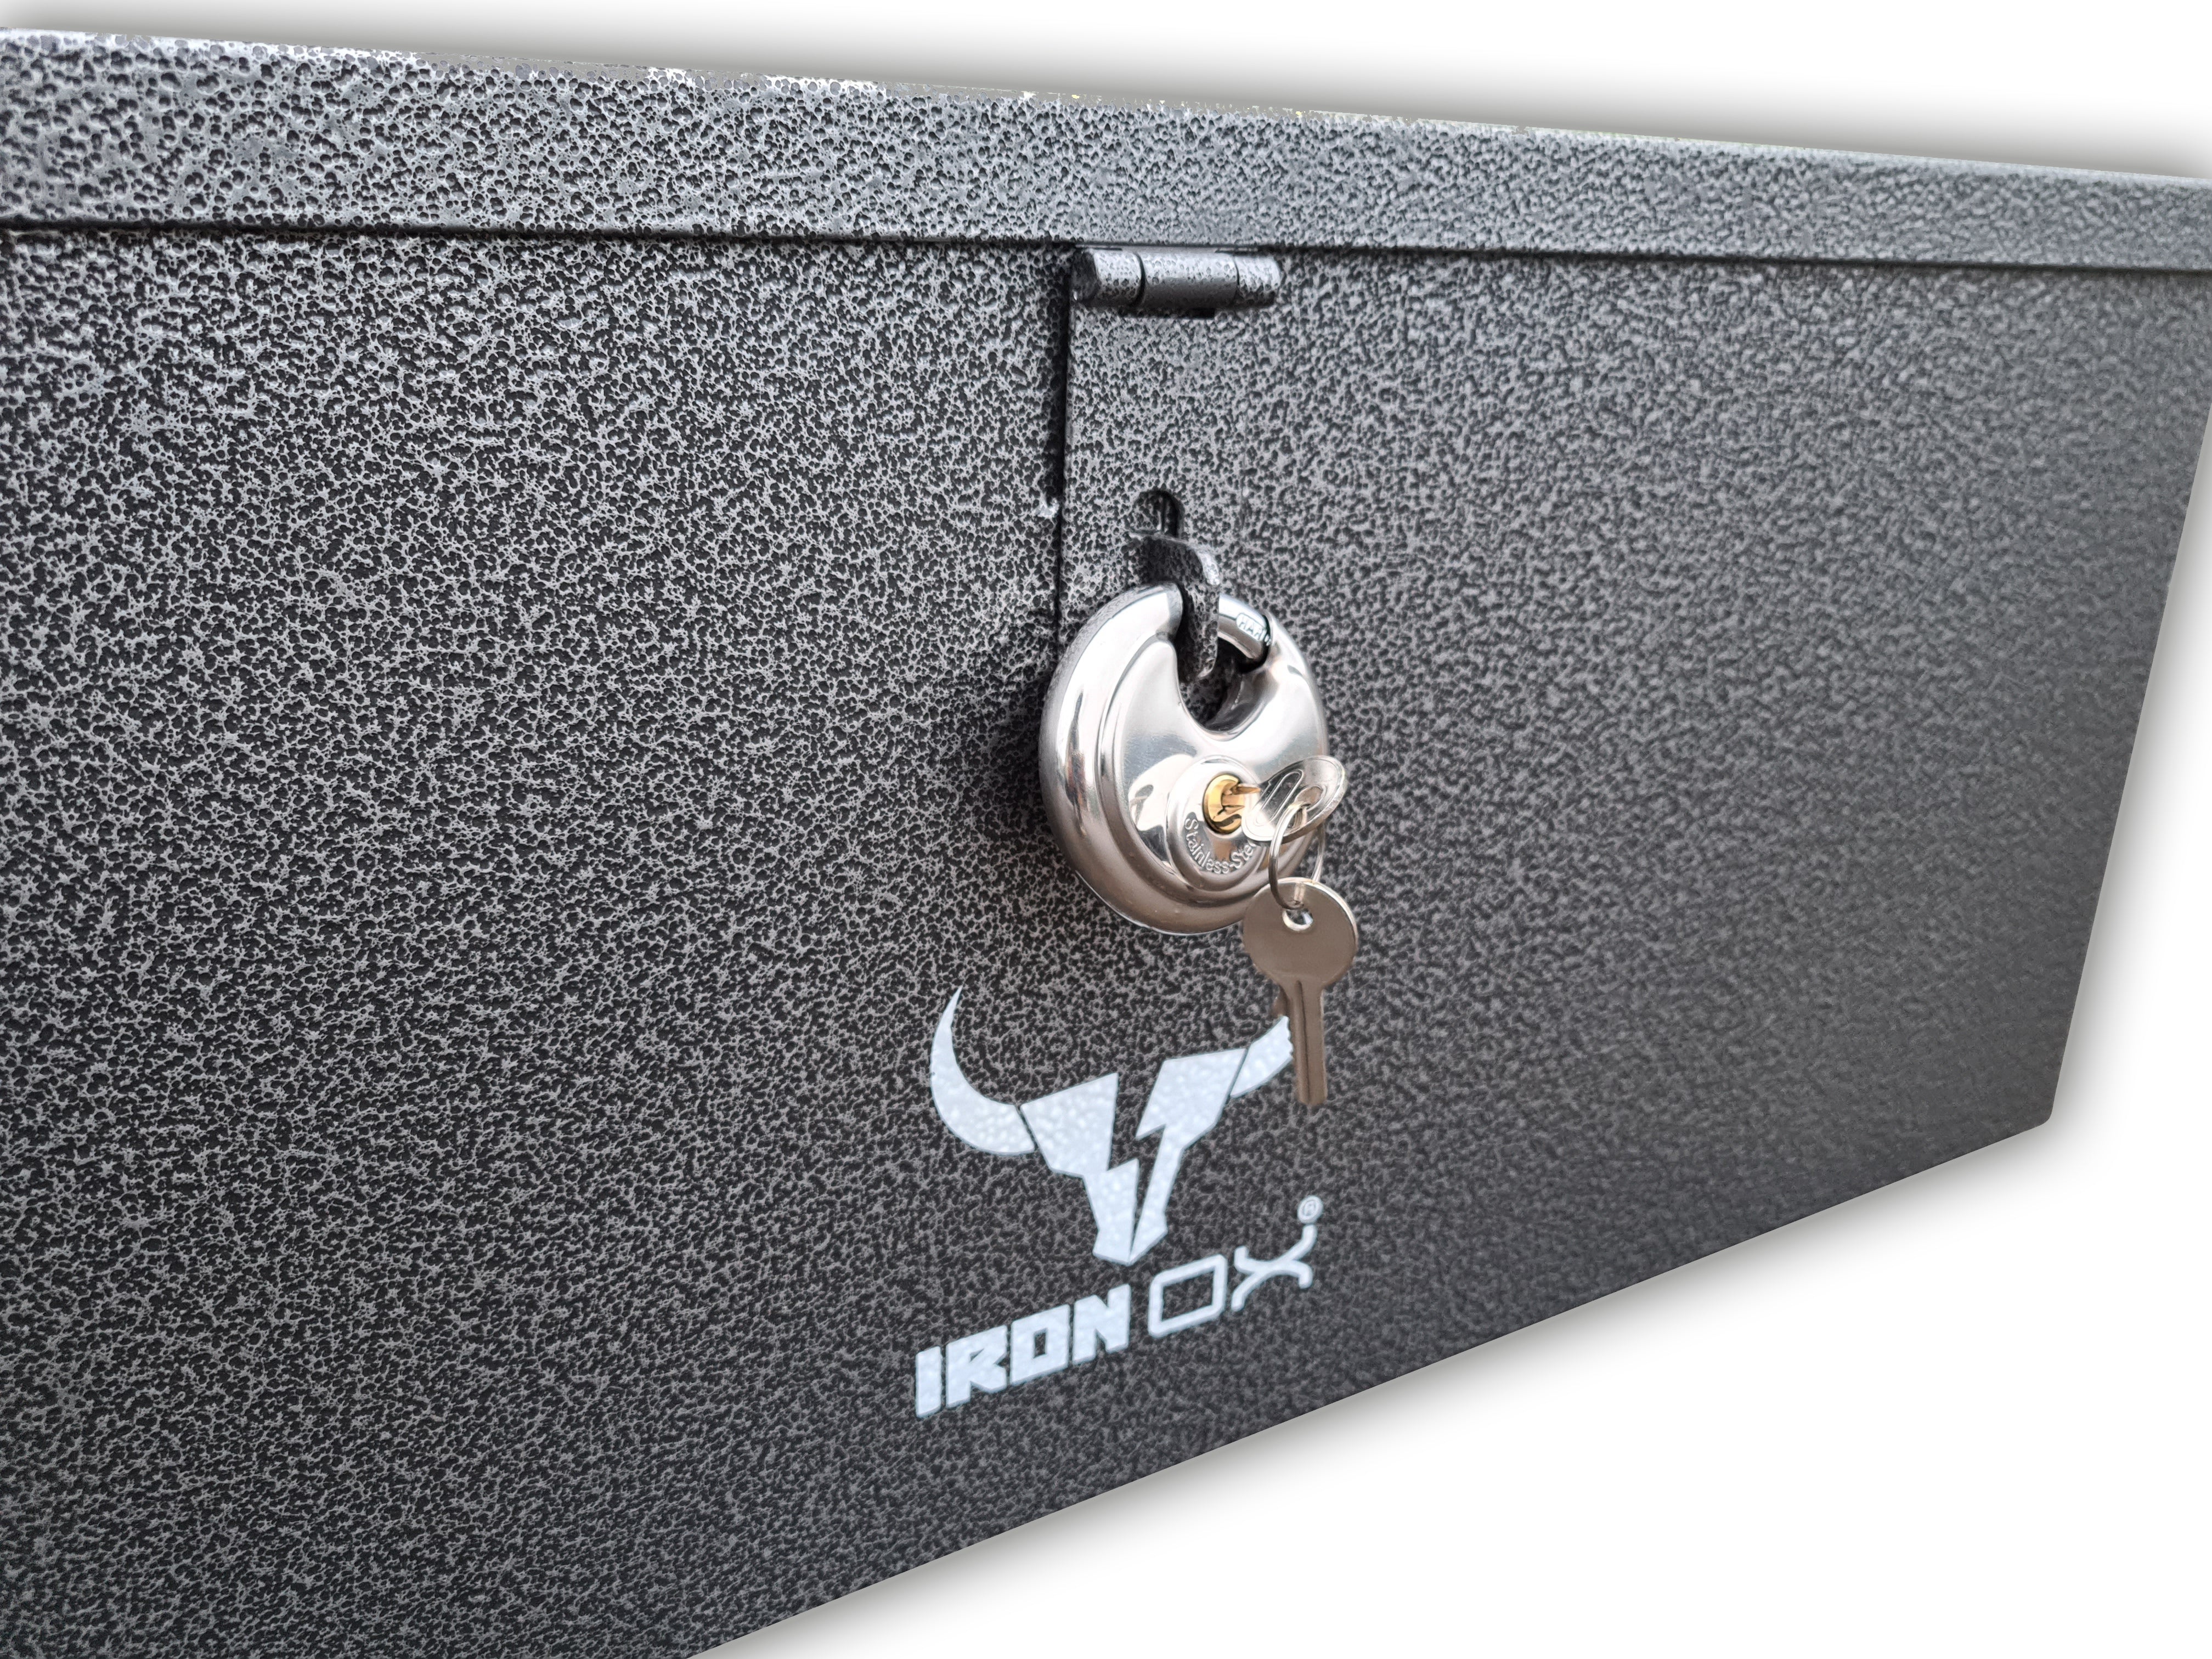 Steel Job Site Tool box Iron Ox® - 3 Piece Set - Free Discus Locks!